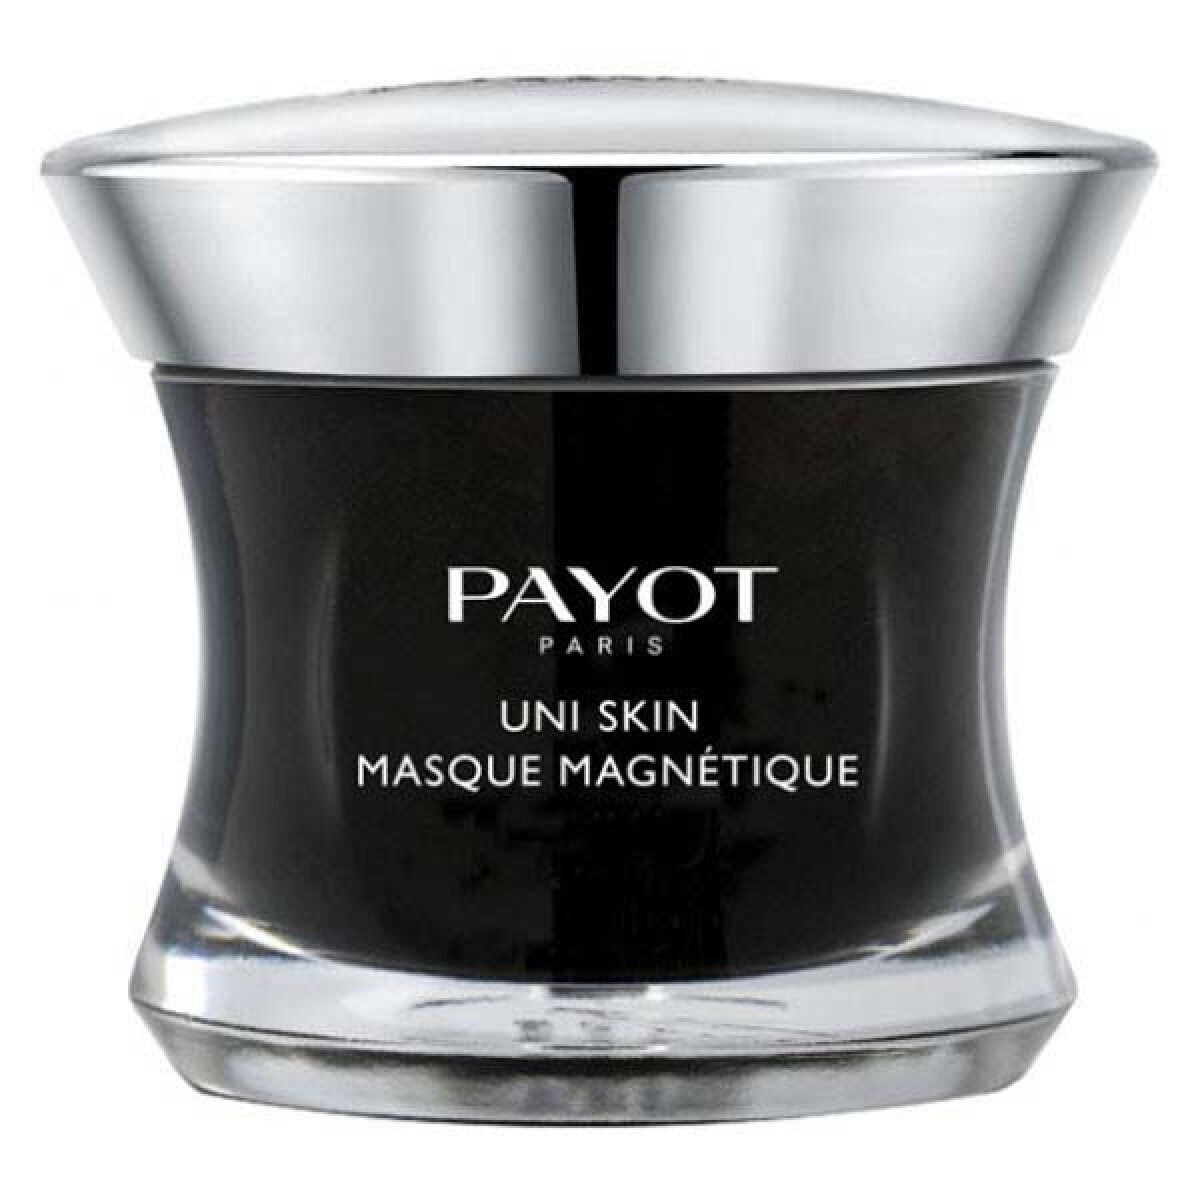 Payot Uni Skin Masque Magnetique 